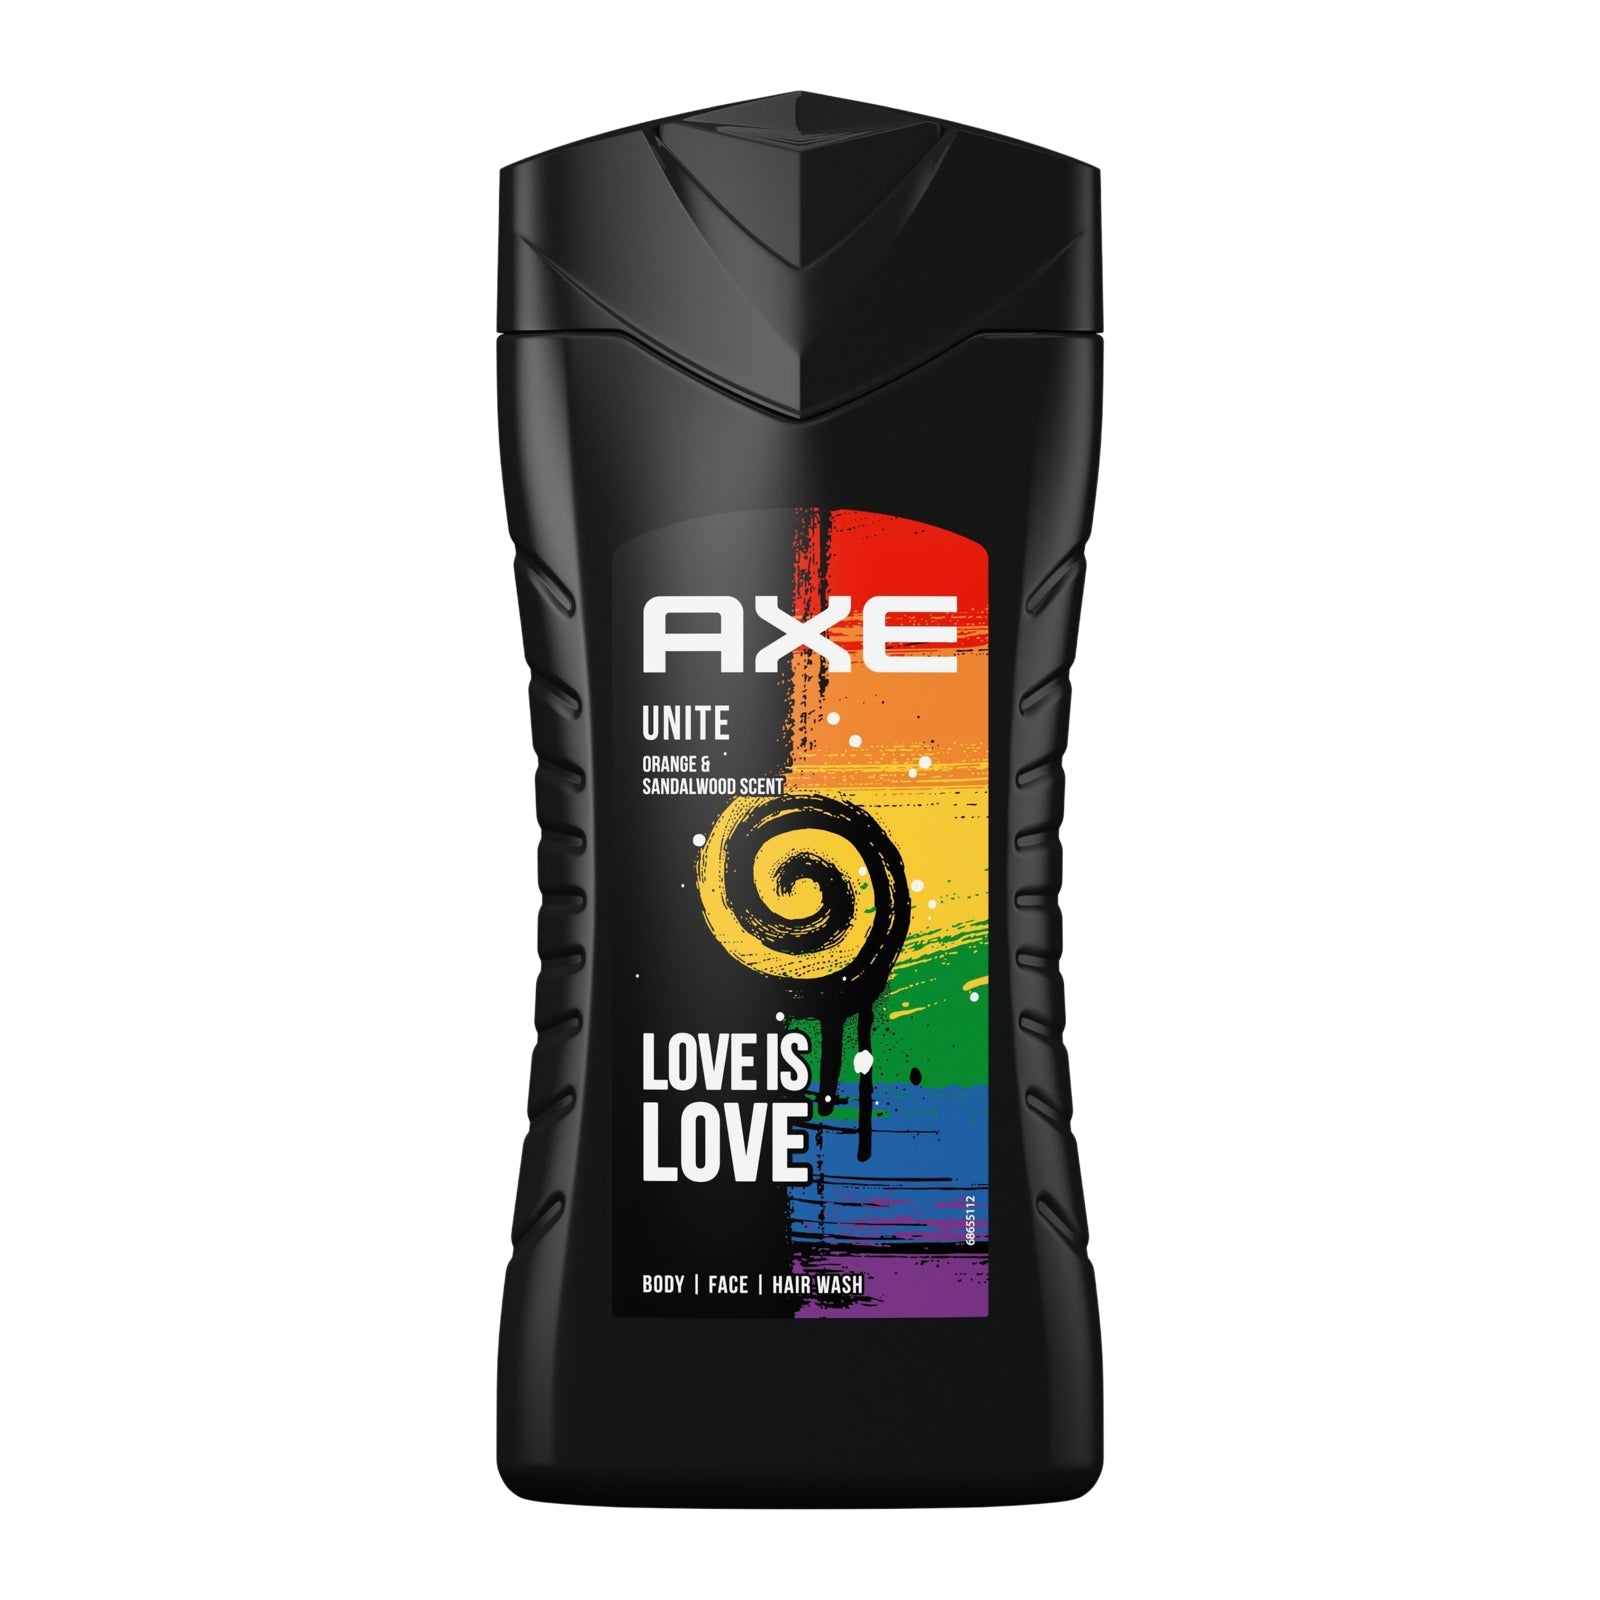 AXE Bodywash Unite Love is Love | Duschgel Limited Edition 250ml